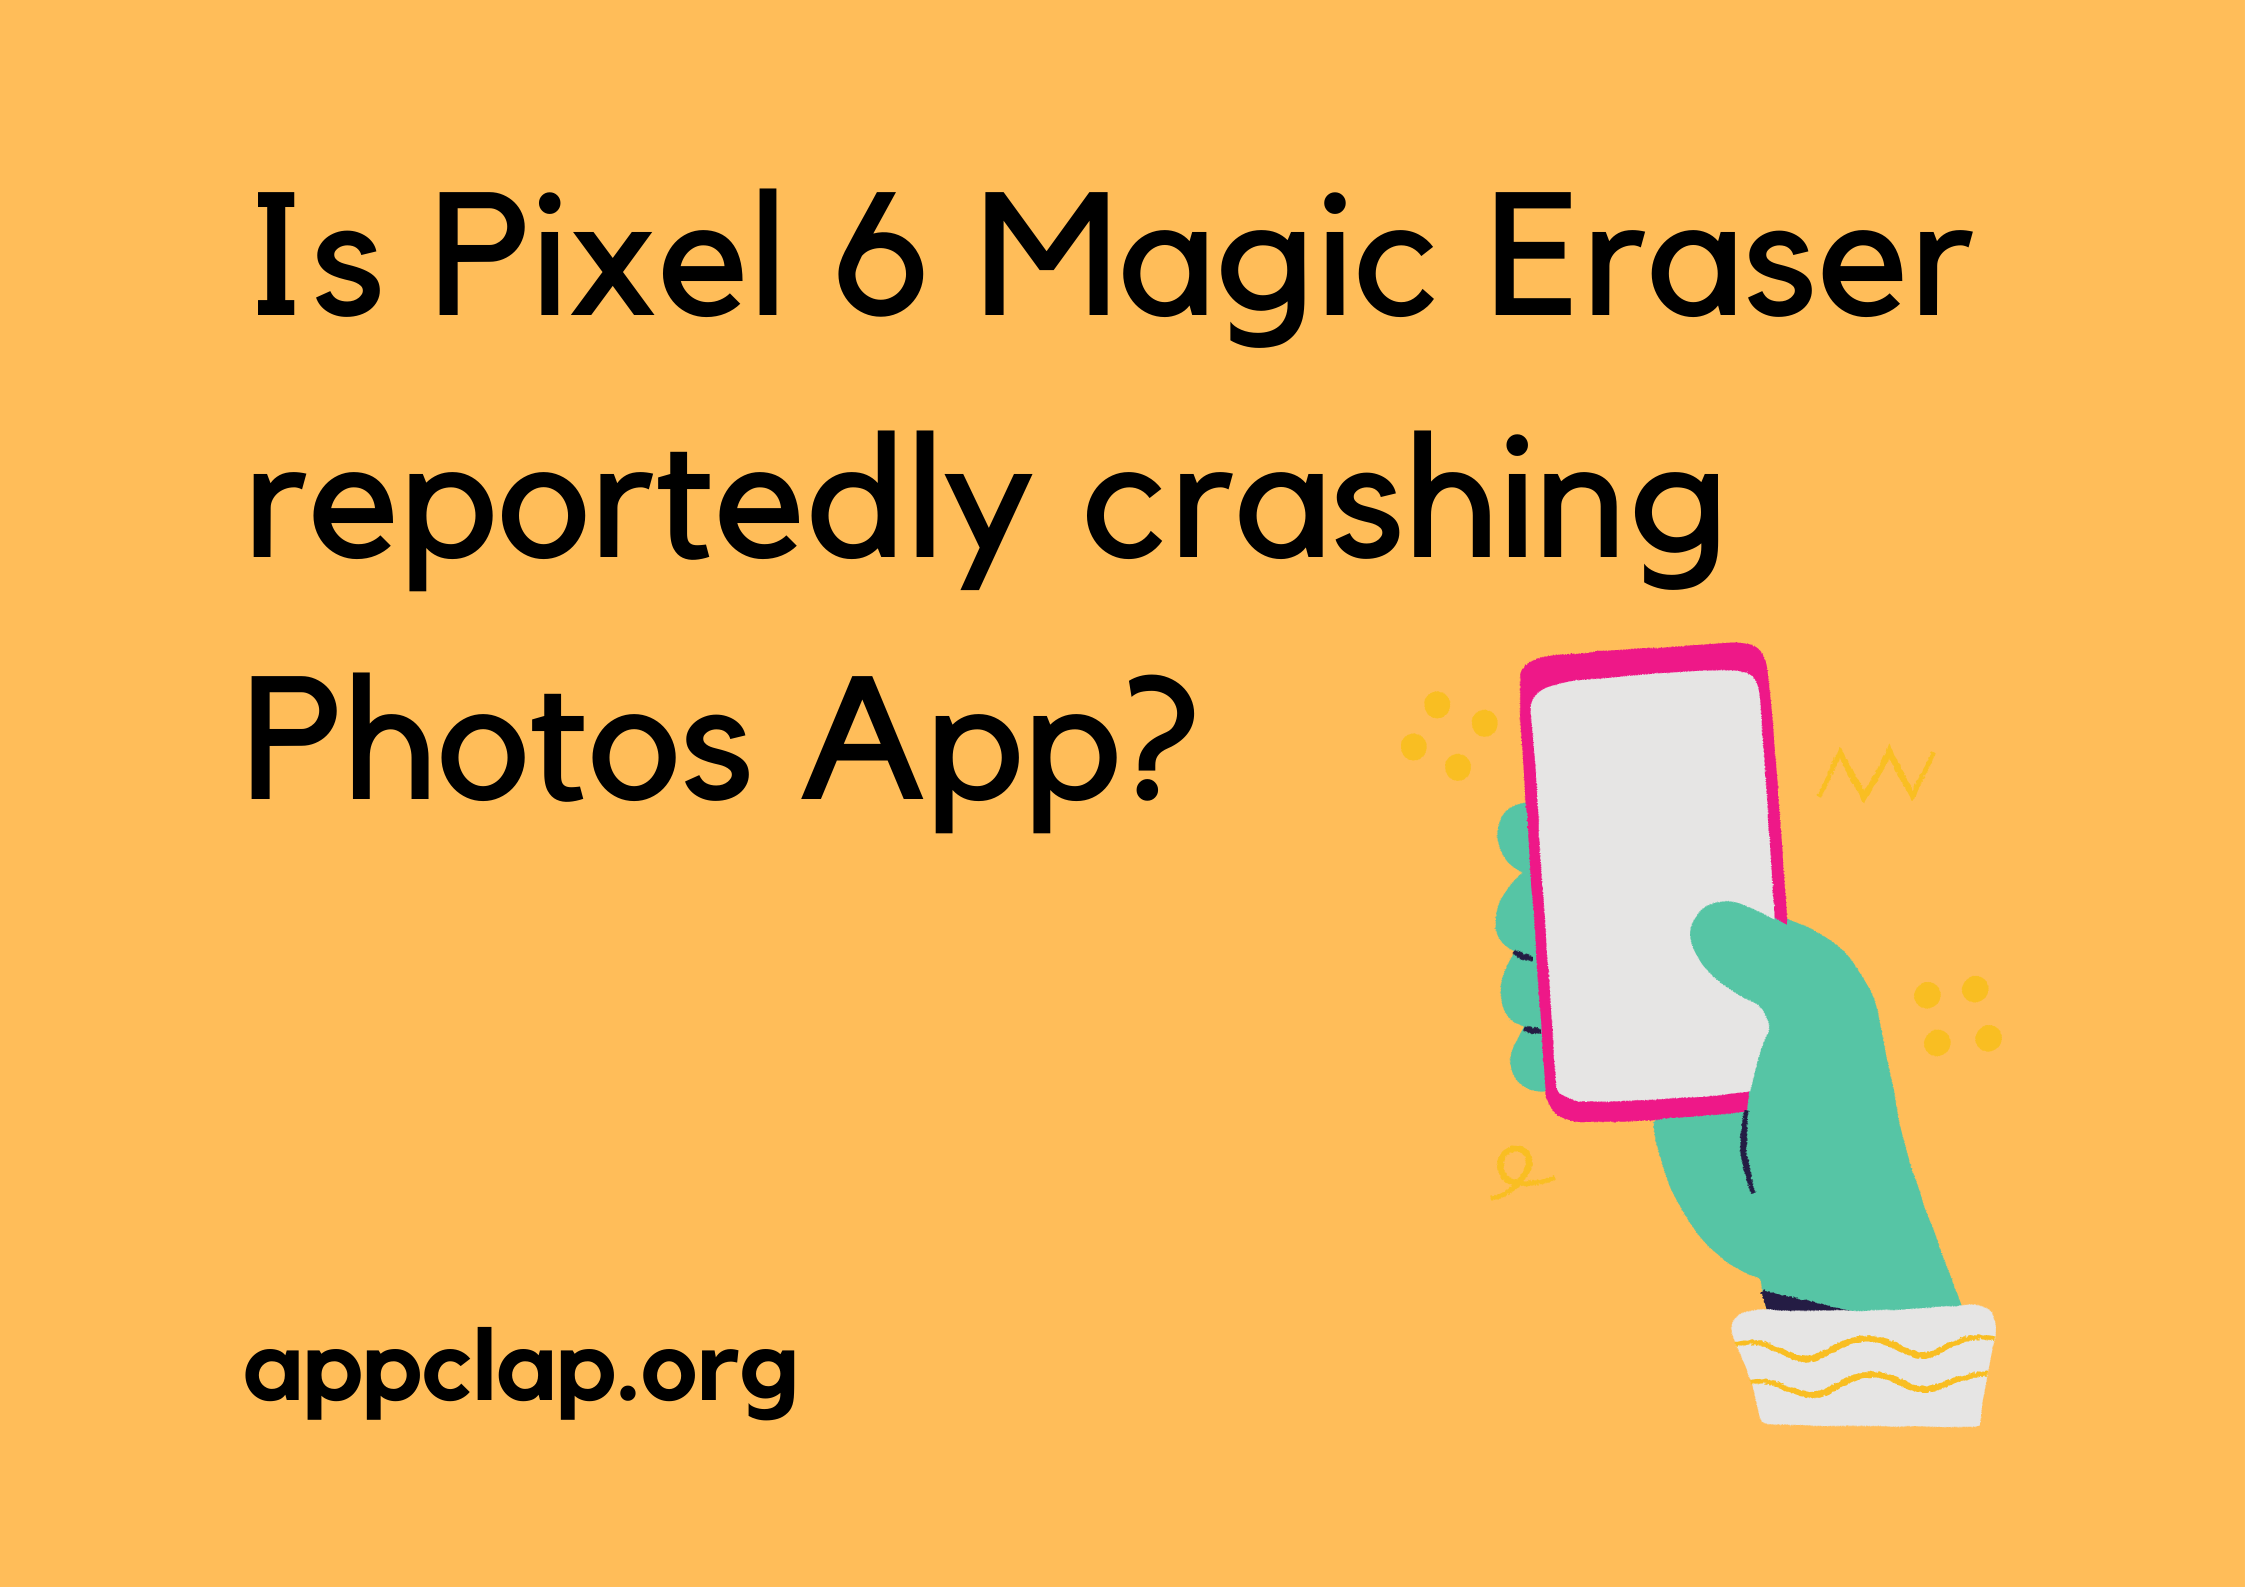 Is Pixel 6 Magic Eraser reportedly crashing Photos App?